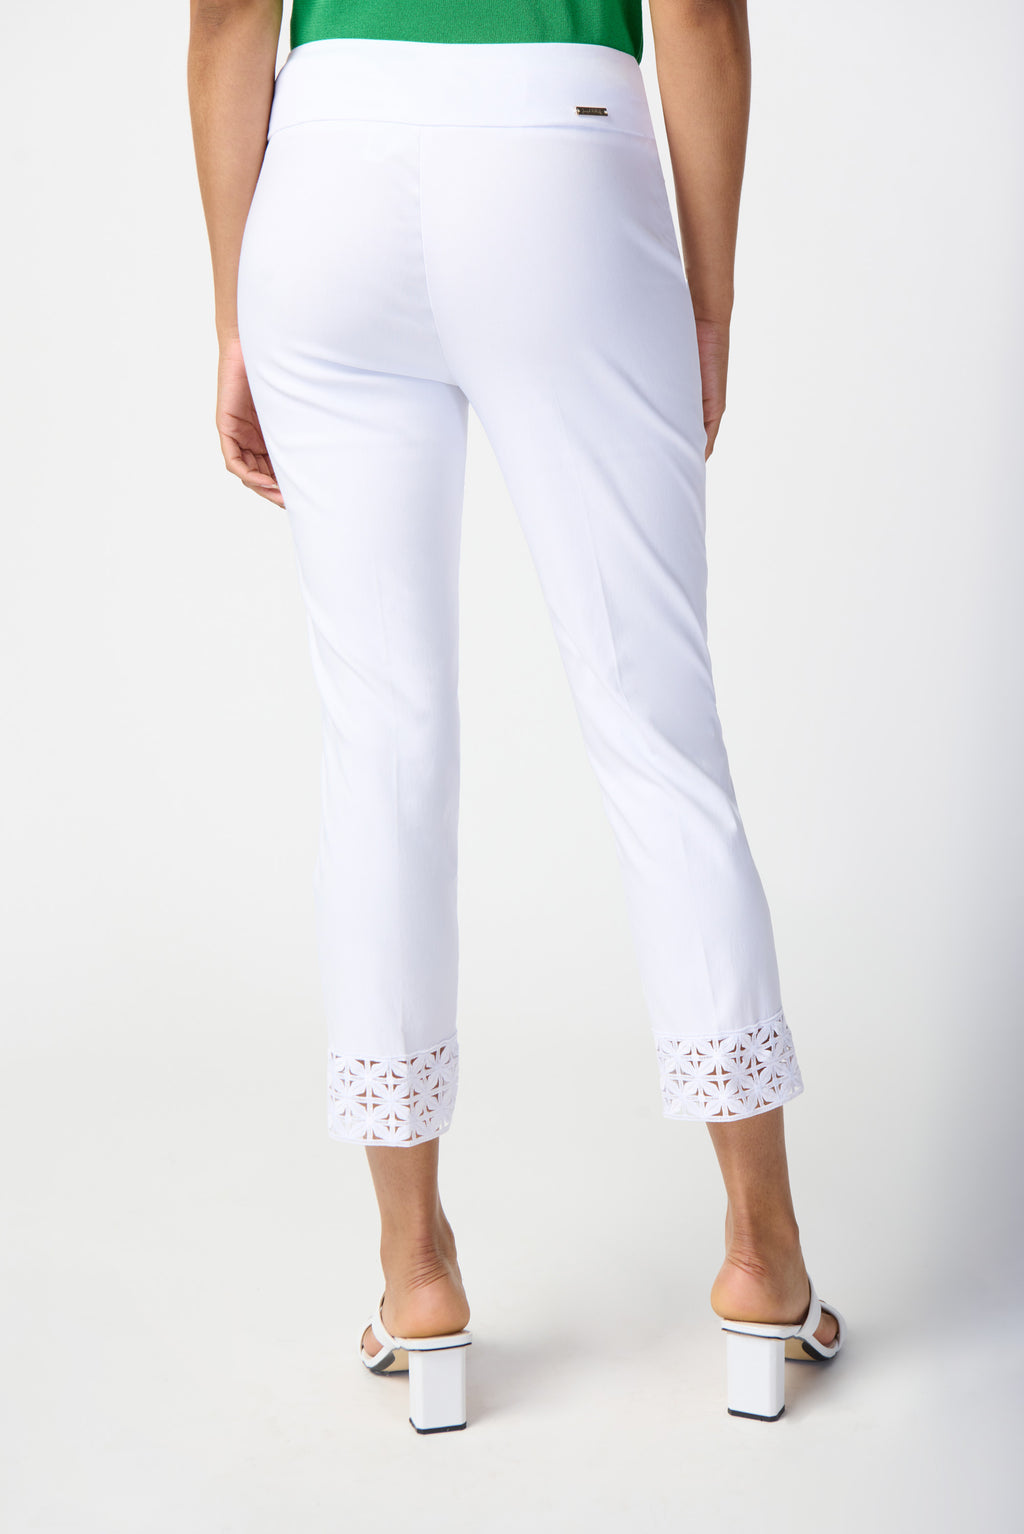 Joseph Ribkoff White Crop Pull-on Pants Style 241102